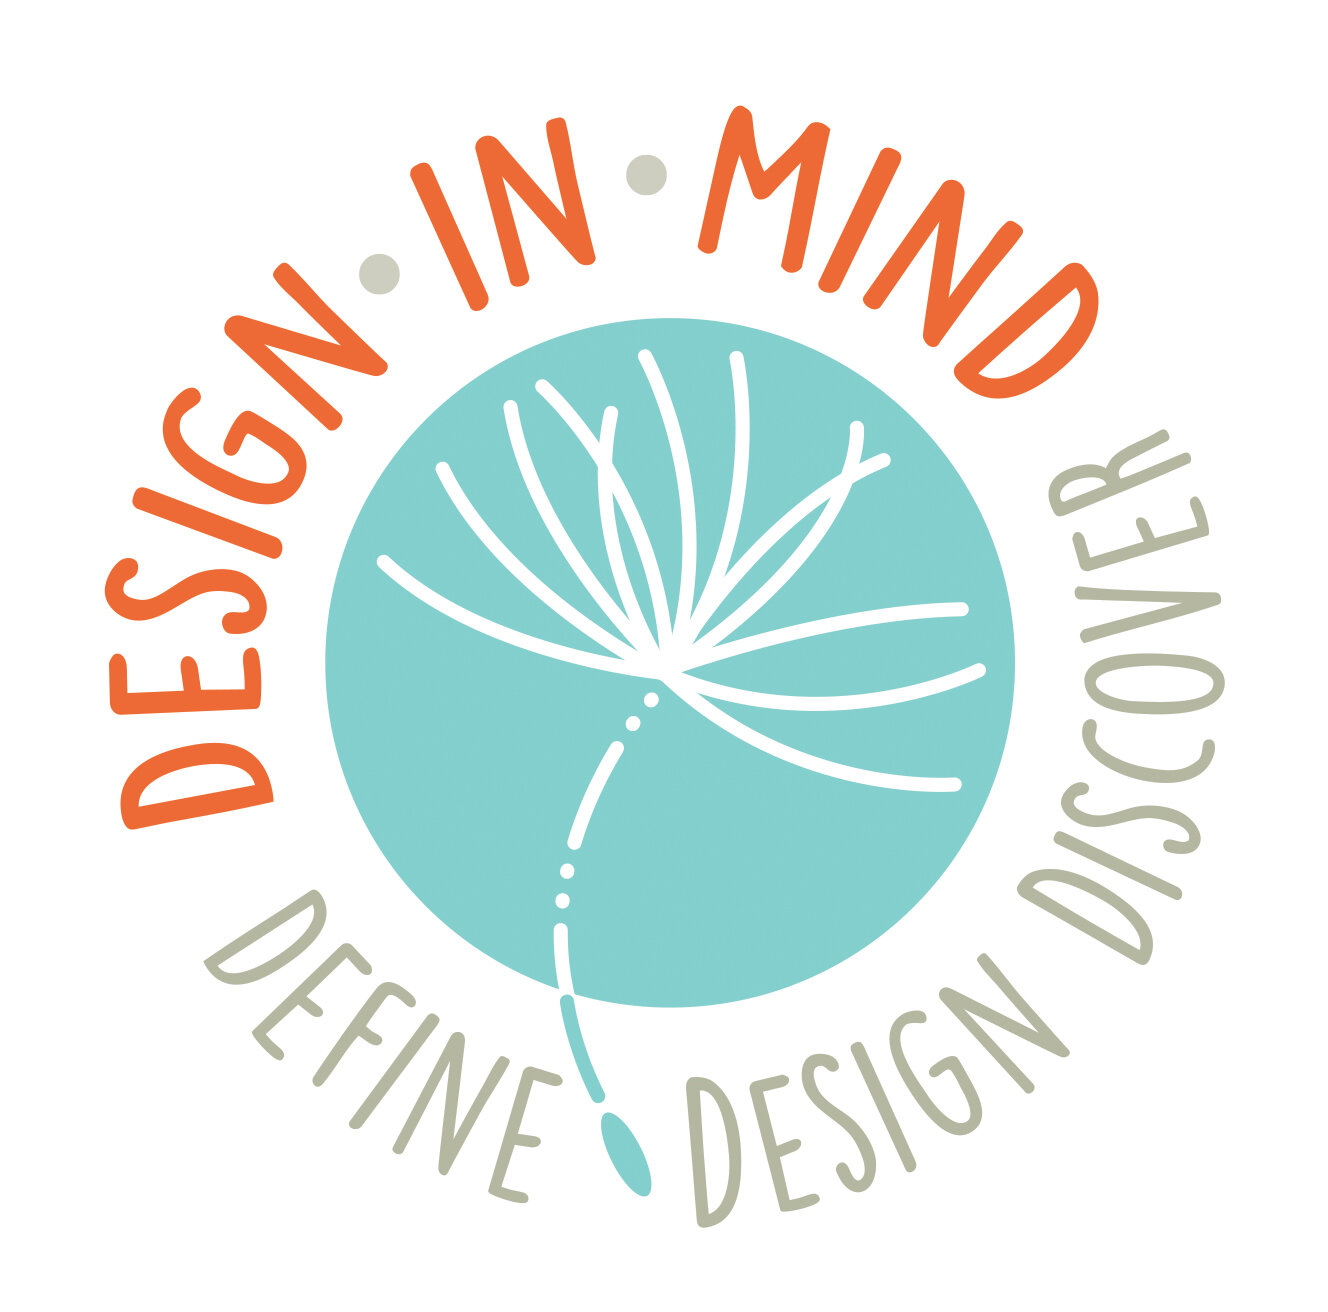 Design in Mind